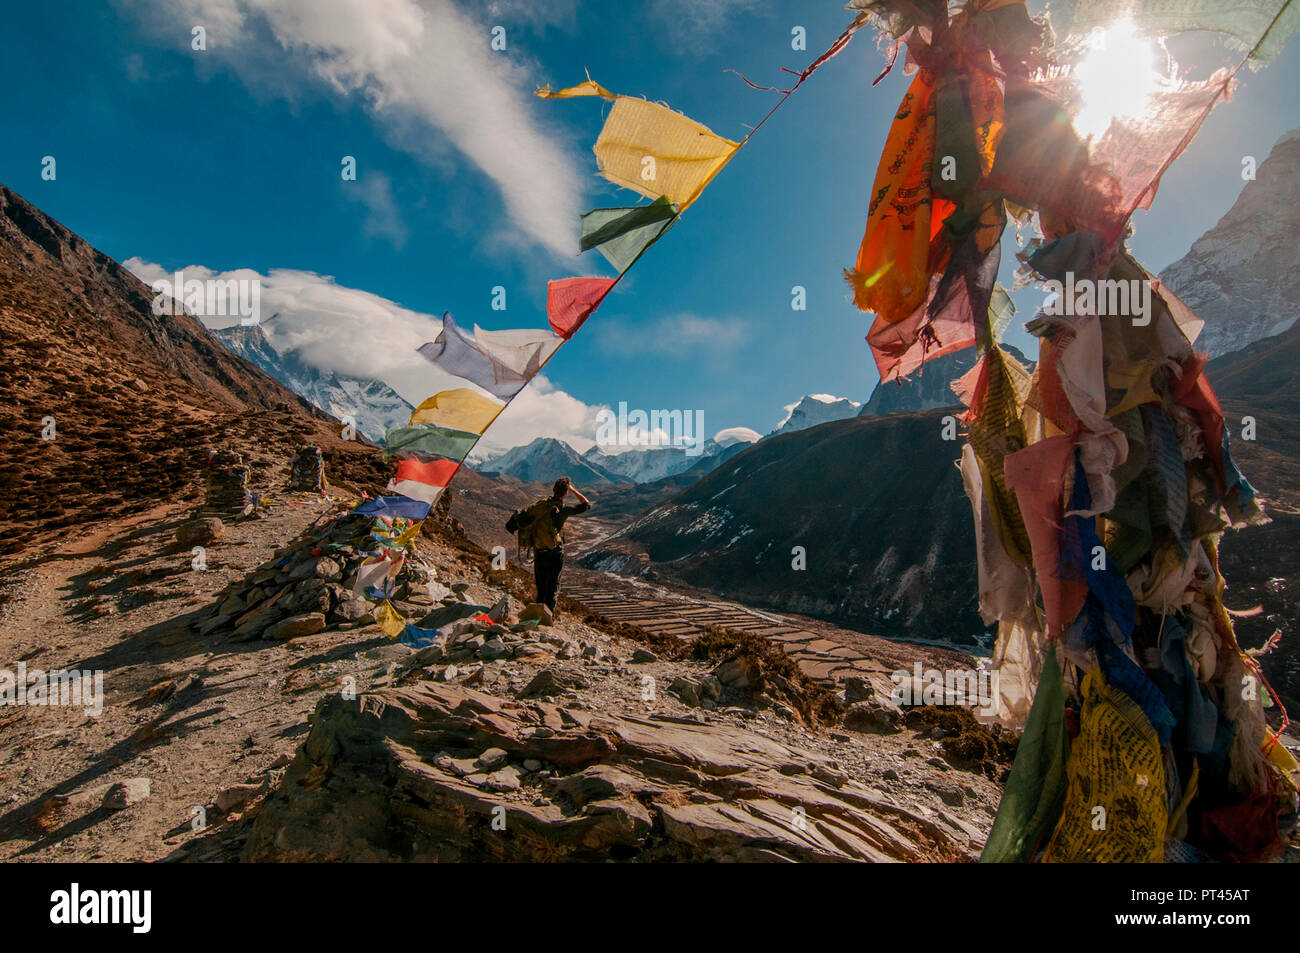 Asien, Nepal, Himalaya Region, Ama Dablam, Khumbu Himal, Sagarmatha National Park, Everest Base Camp, Trekking, Stockfoto